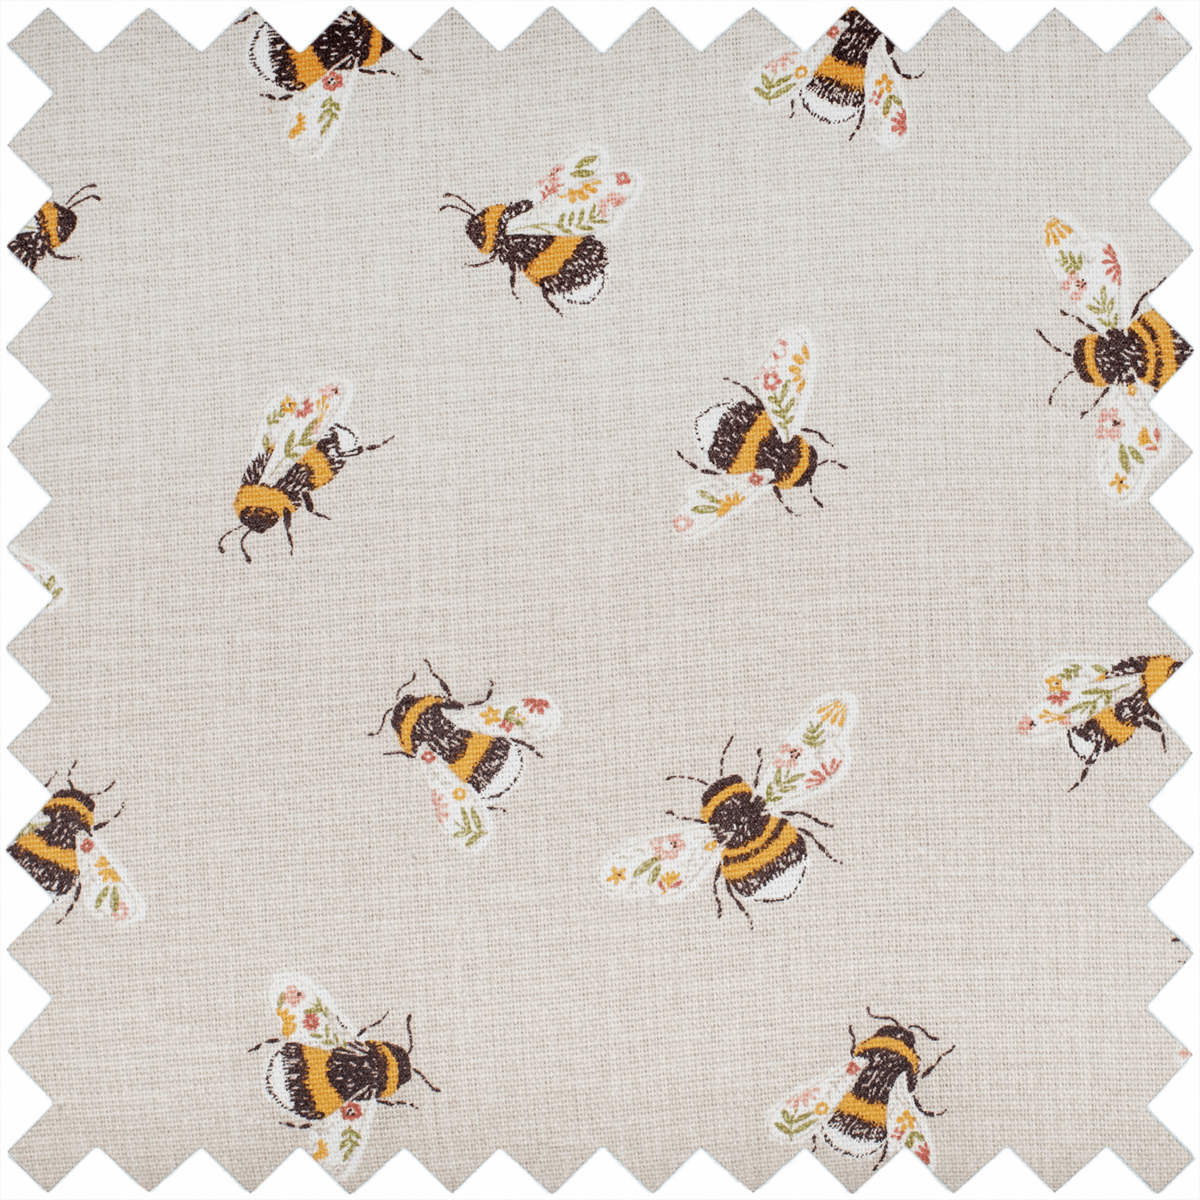 Bees Knitting Bag (Matt PVC)